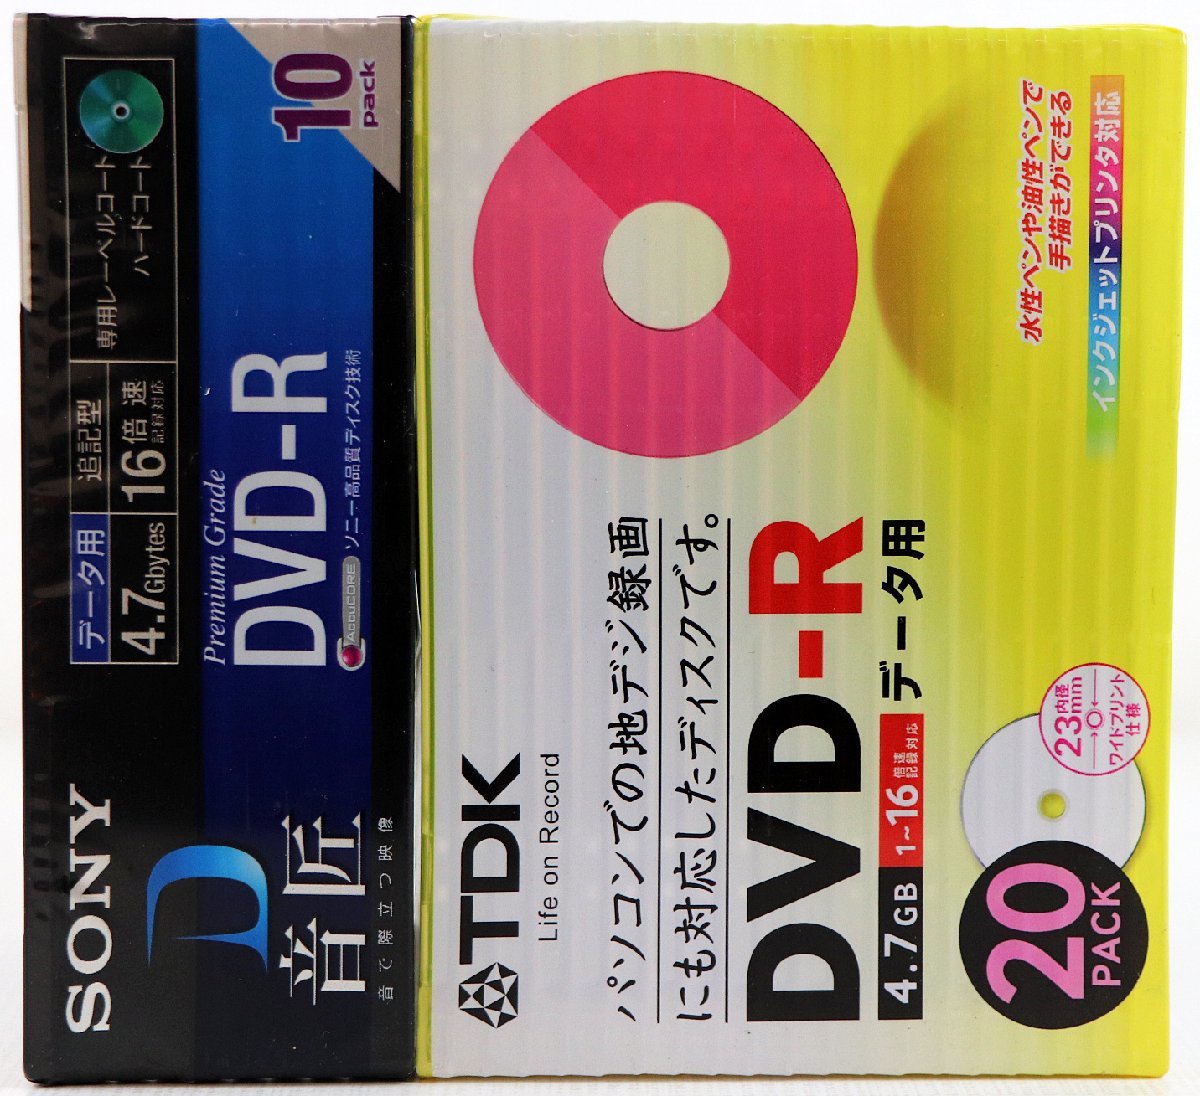 S♪未使用品♪データ用DVD-R 『10DMR47HMSH (10Pack)/ DR47DPWC20T (20Pack)』 SONY/TDK 4.7GB(片面1層) 16倍速対応 ※未開封_画像7